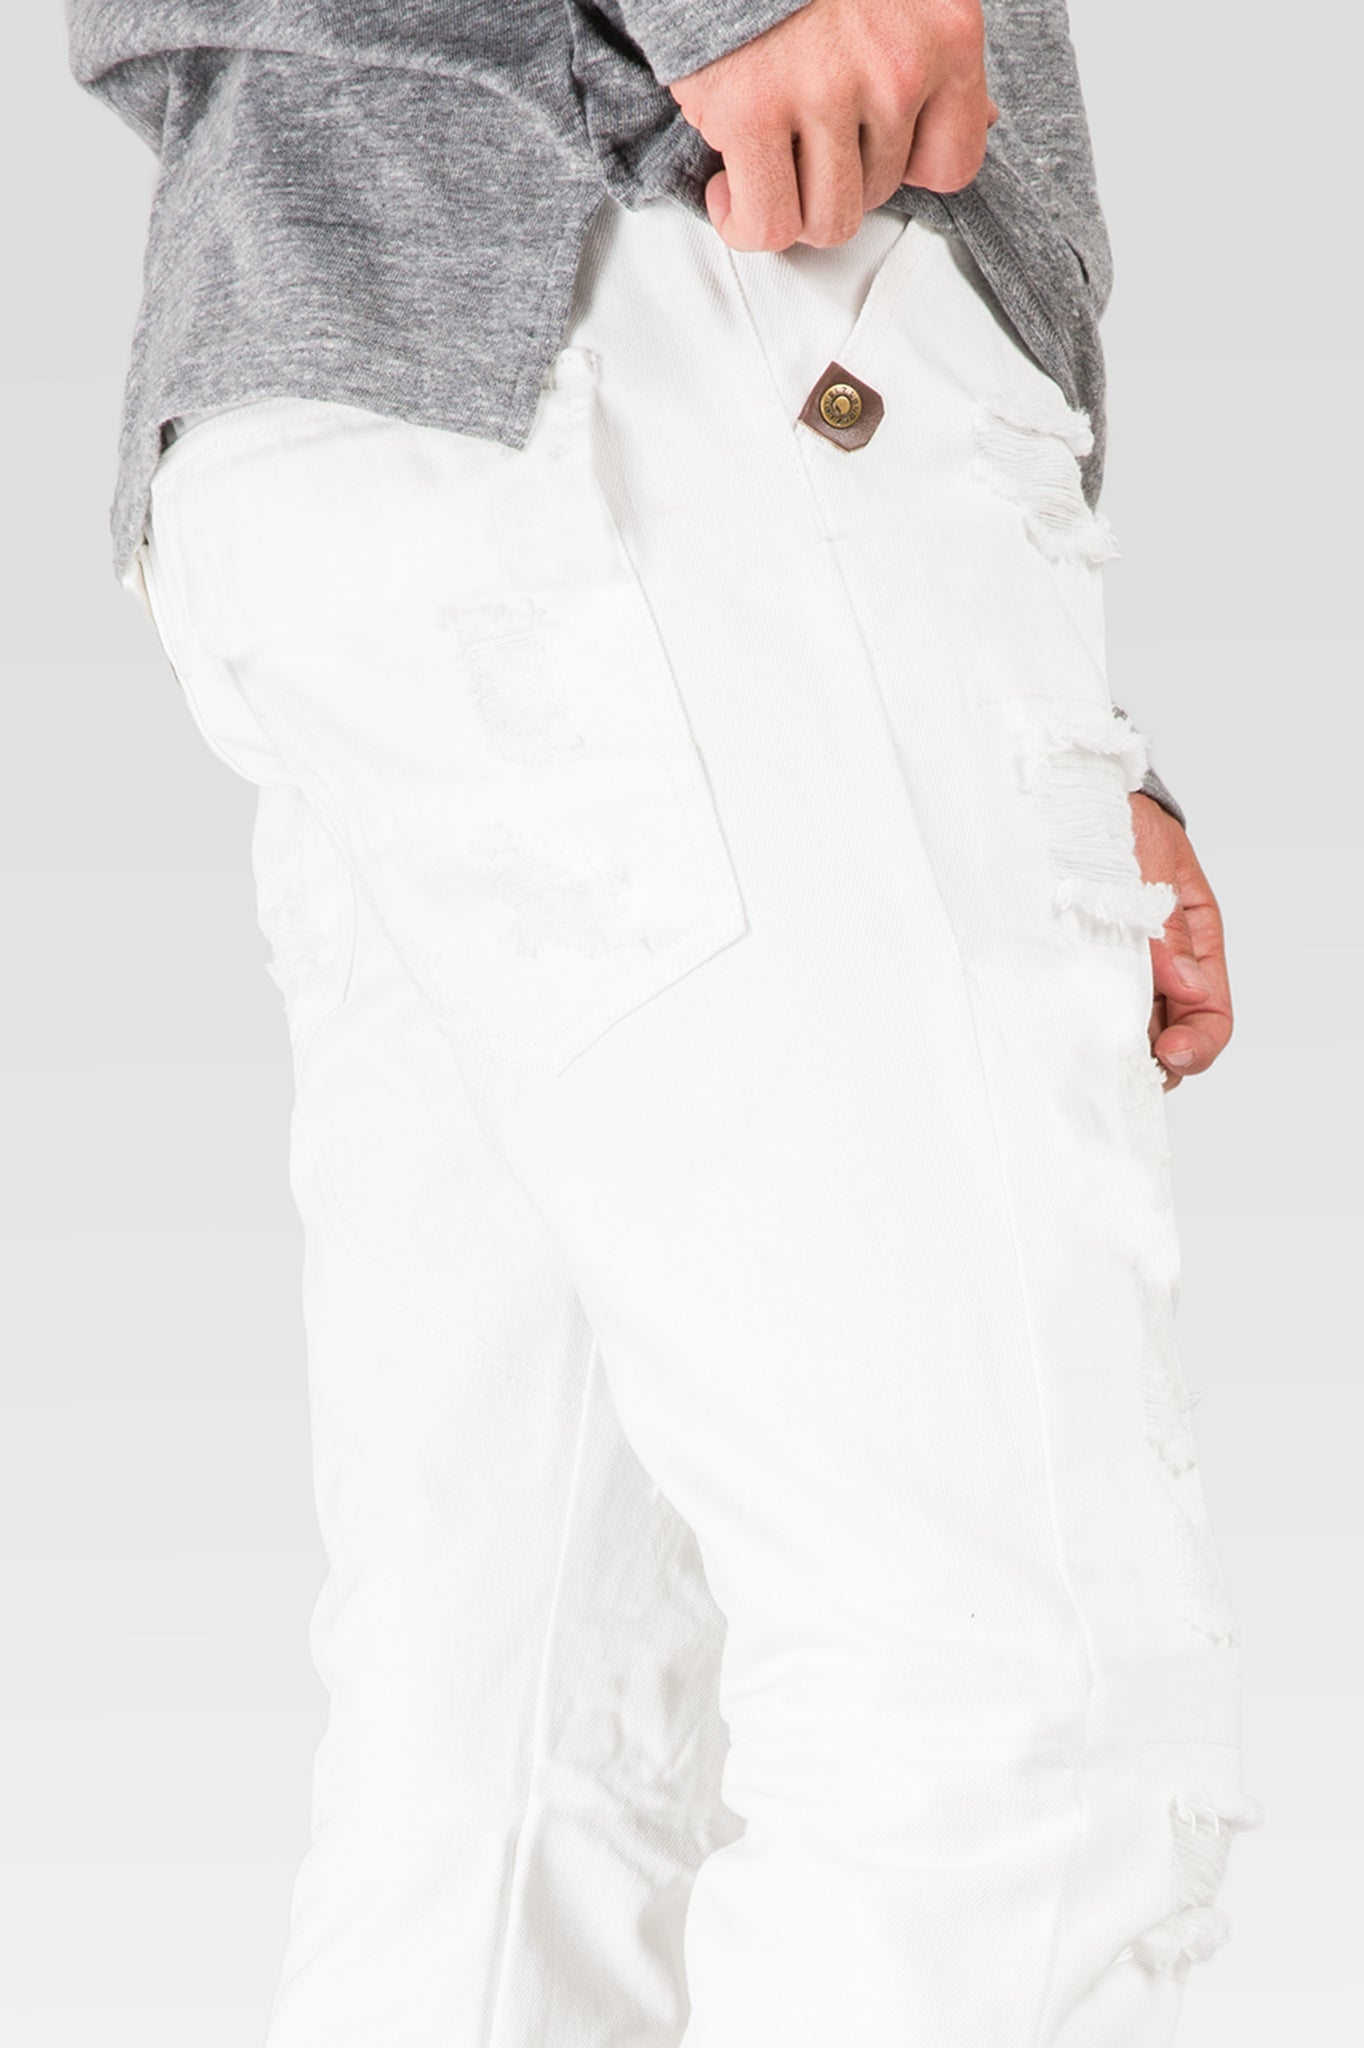 Slim Straight Distressed & Mended White Premium Denim 5 Pocket Jeans